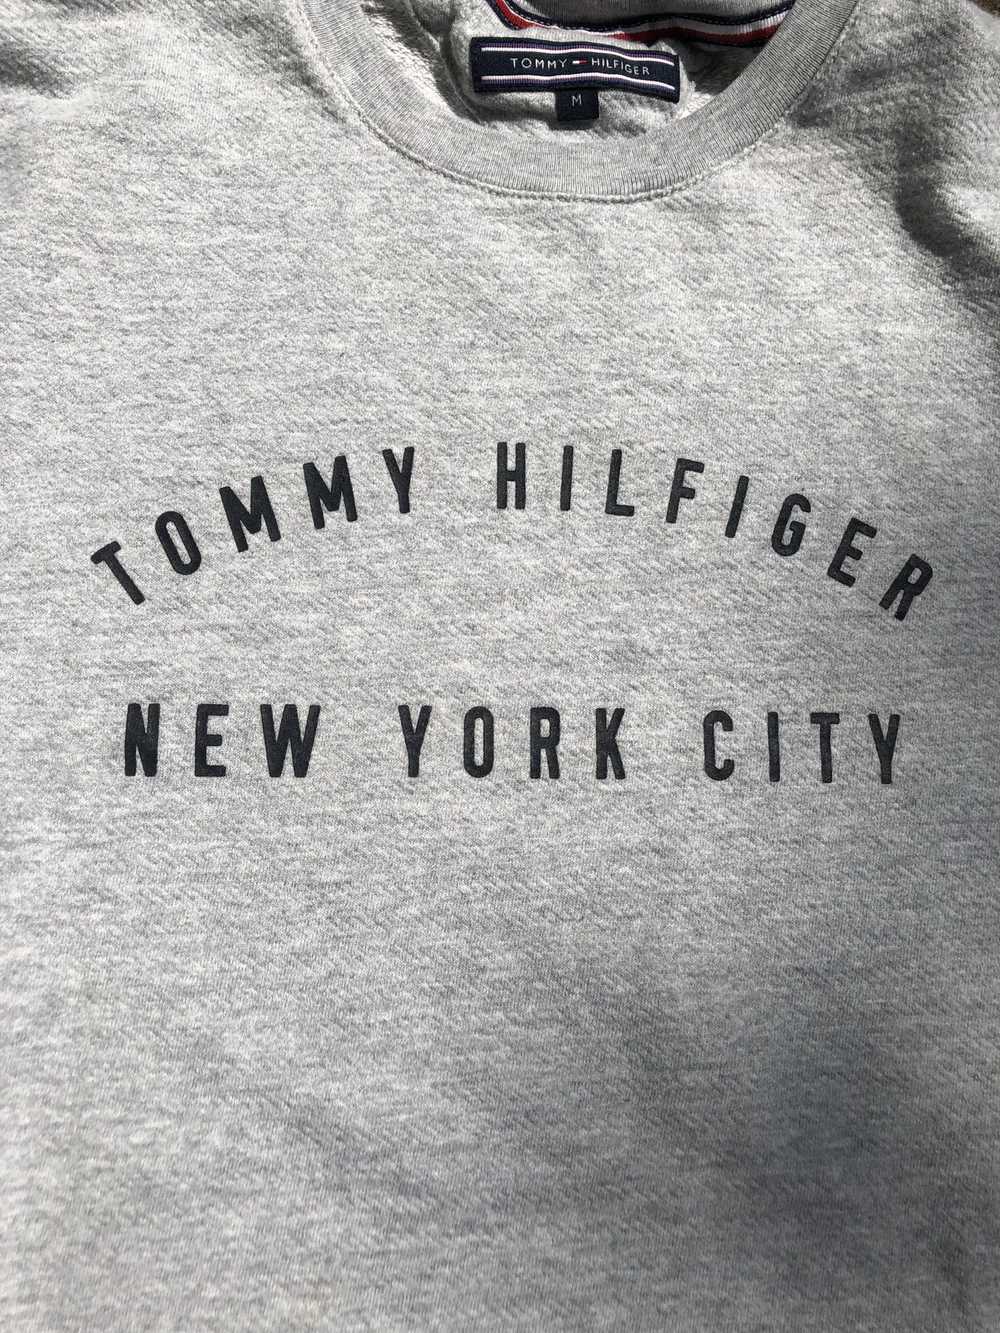 Tommy Hilfiger Tommy Hilfiger New York City Sweat… - image 2